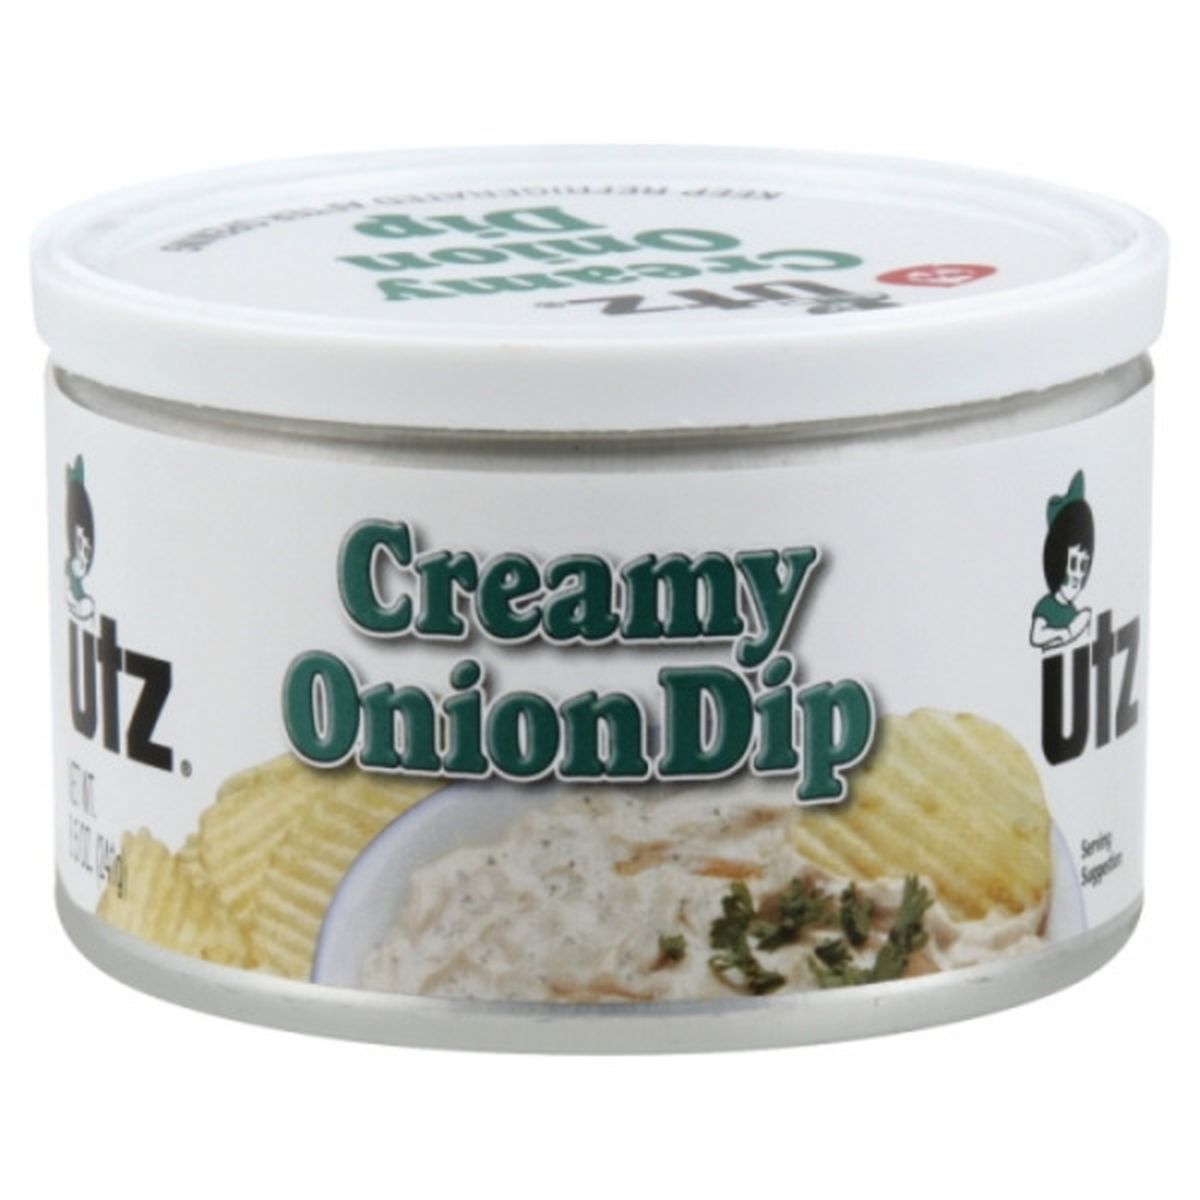 Calories in Utz Onion Drip, Creamy